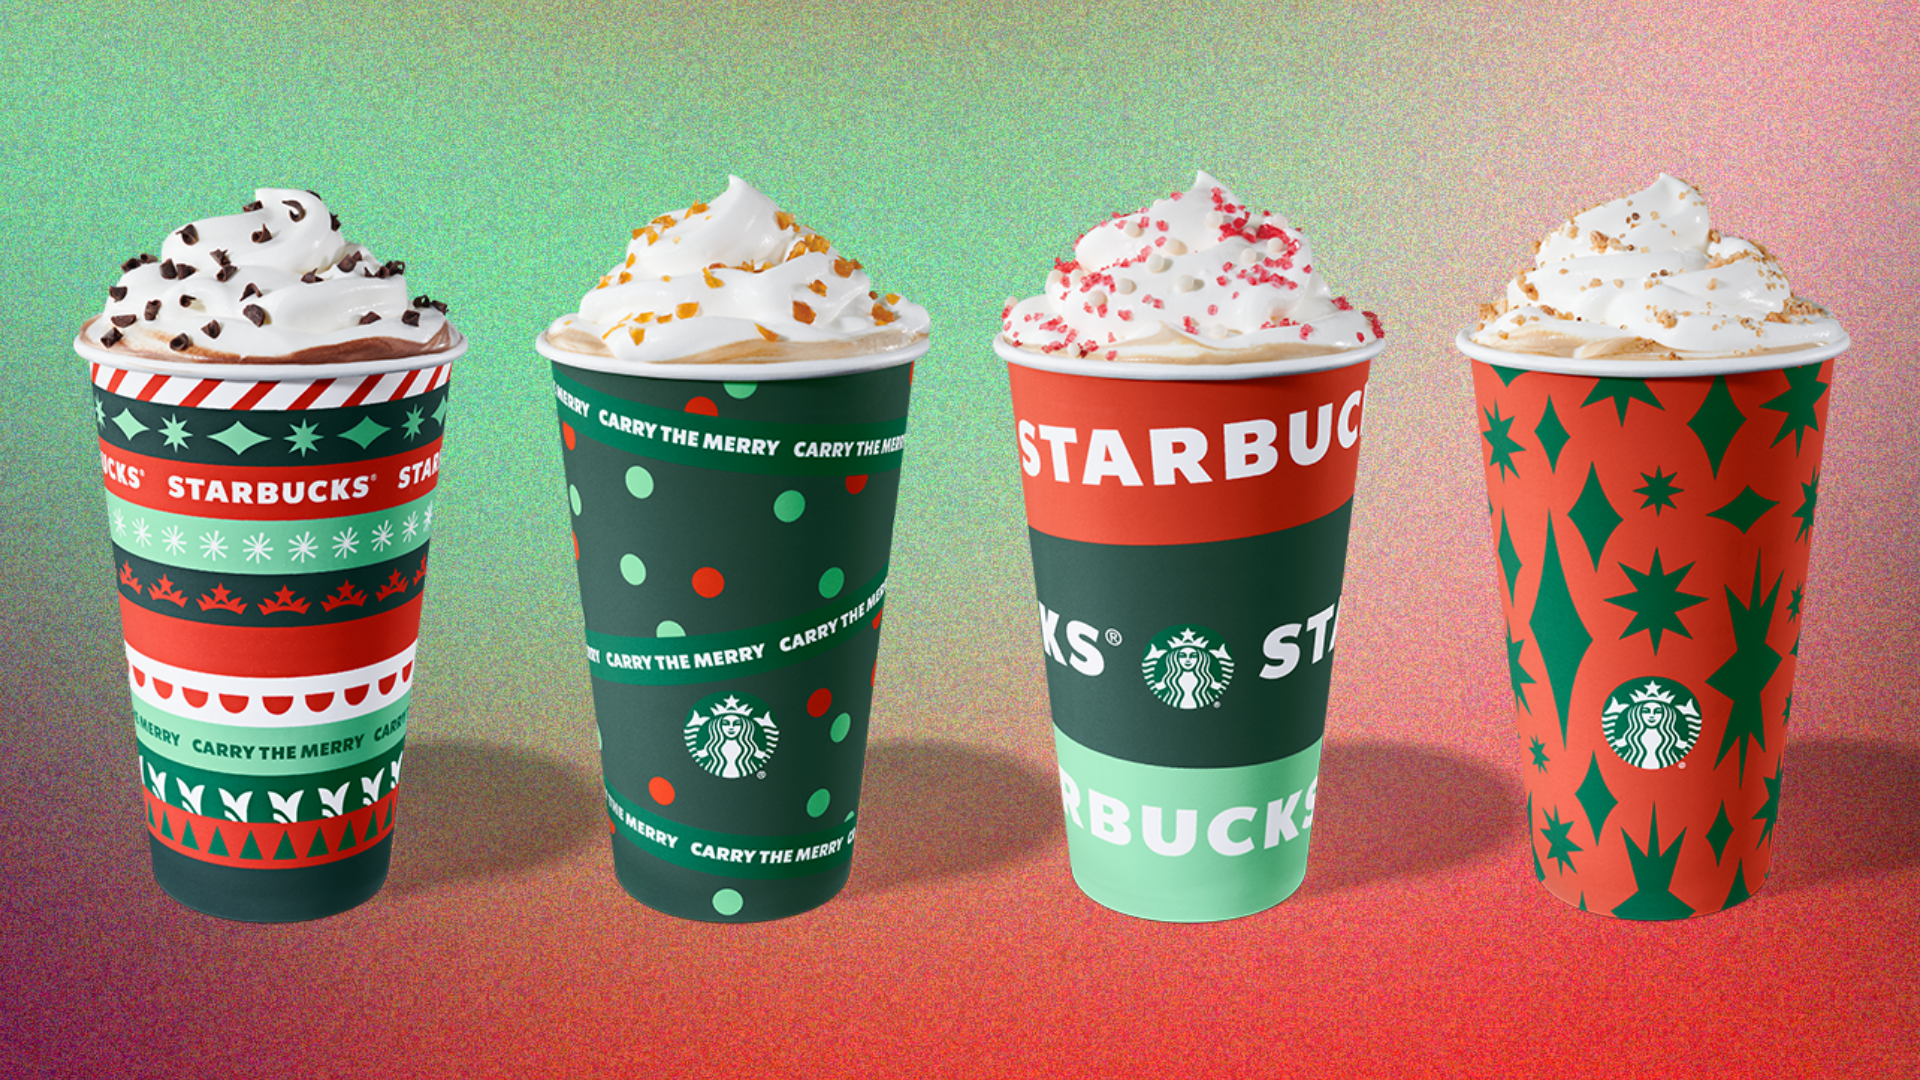 Starbucks' 2020 holiday cups, menu items return Nov. 2020news.com